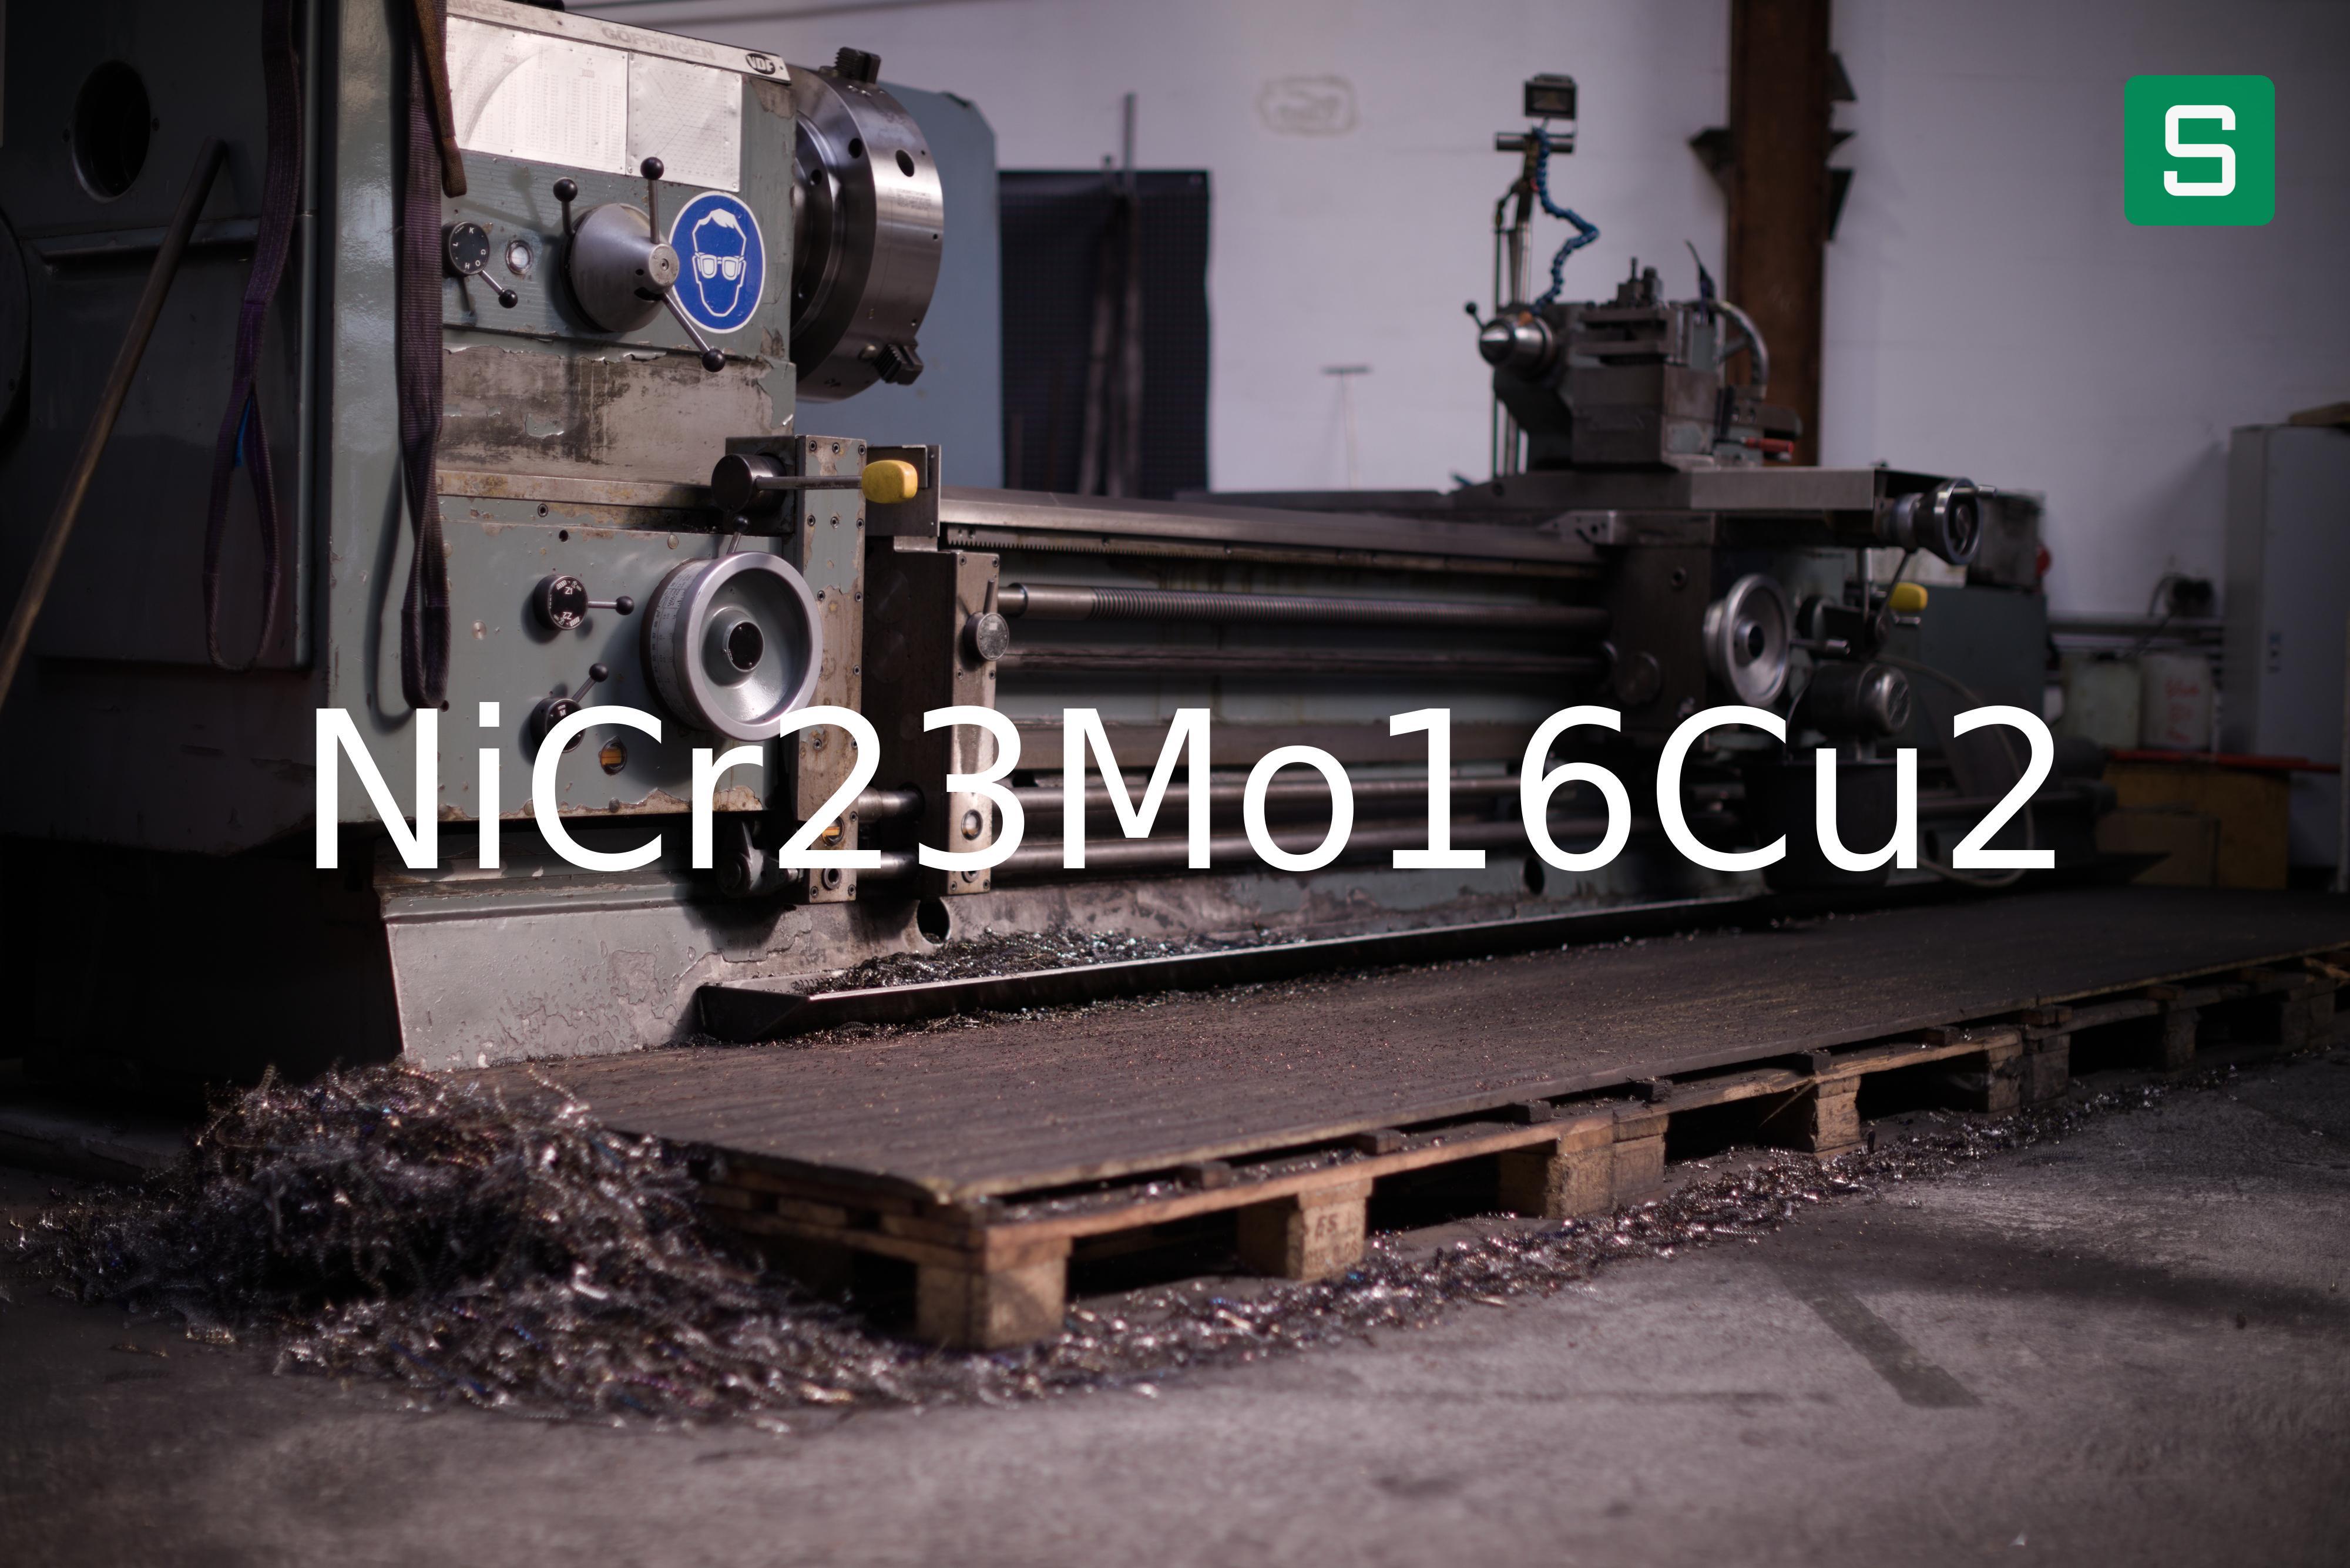 Steel Material: NiCr23Mo16Cu2